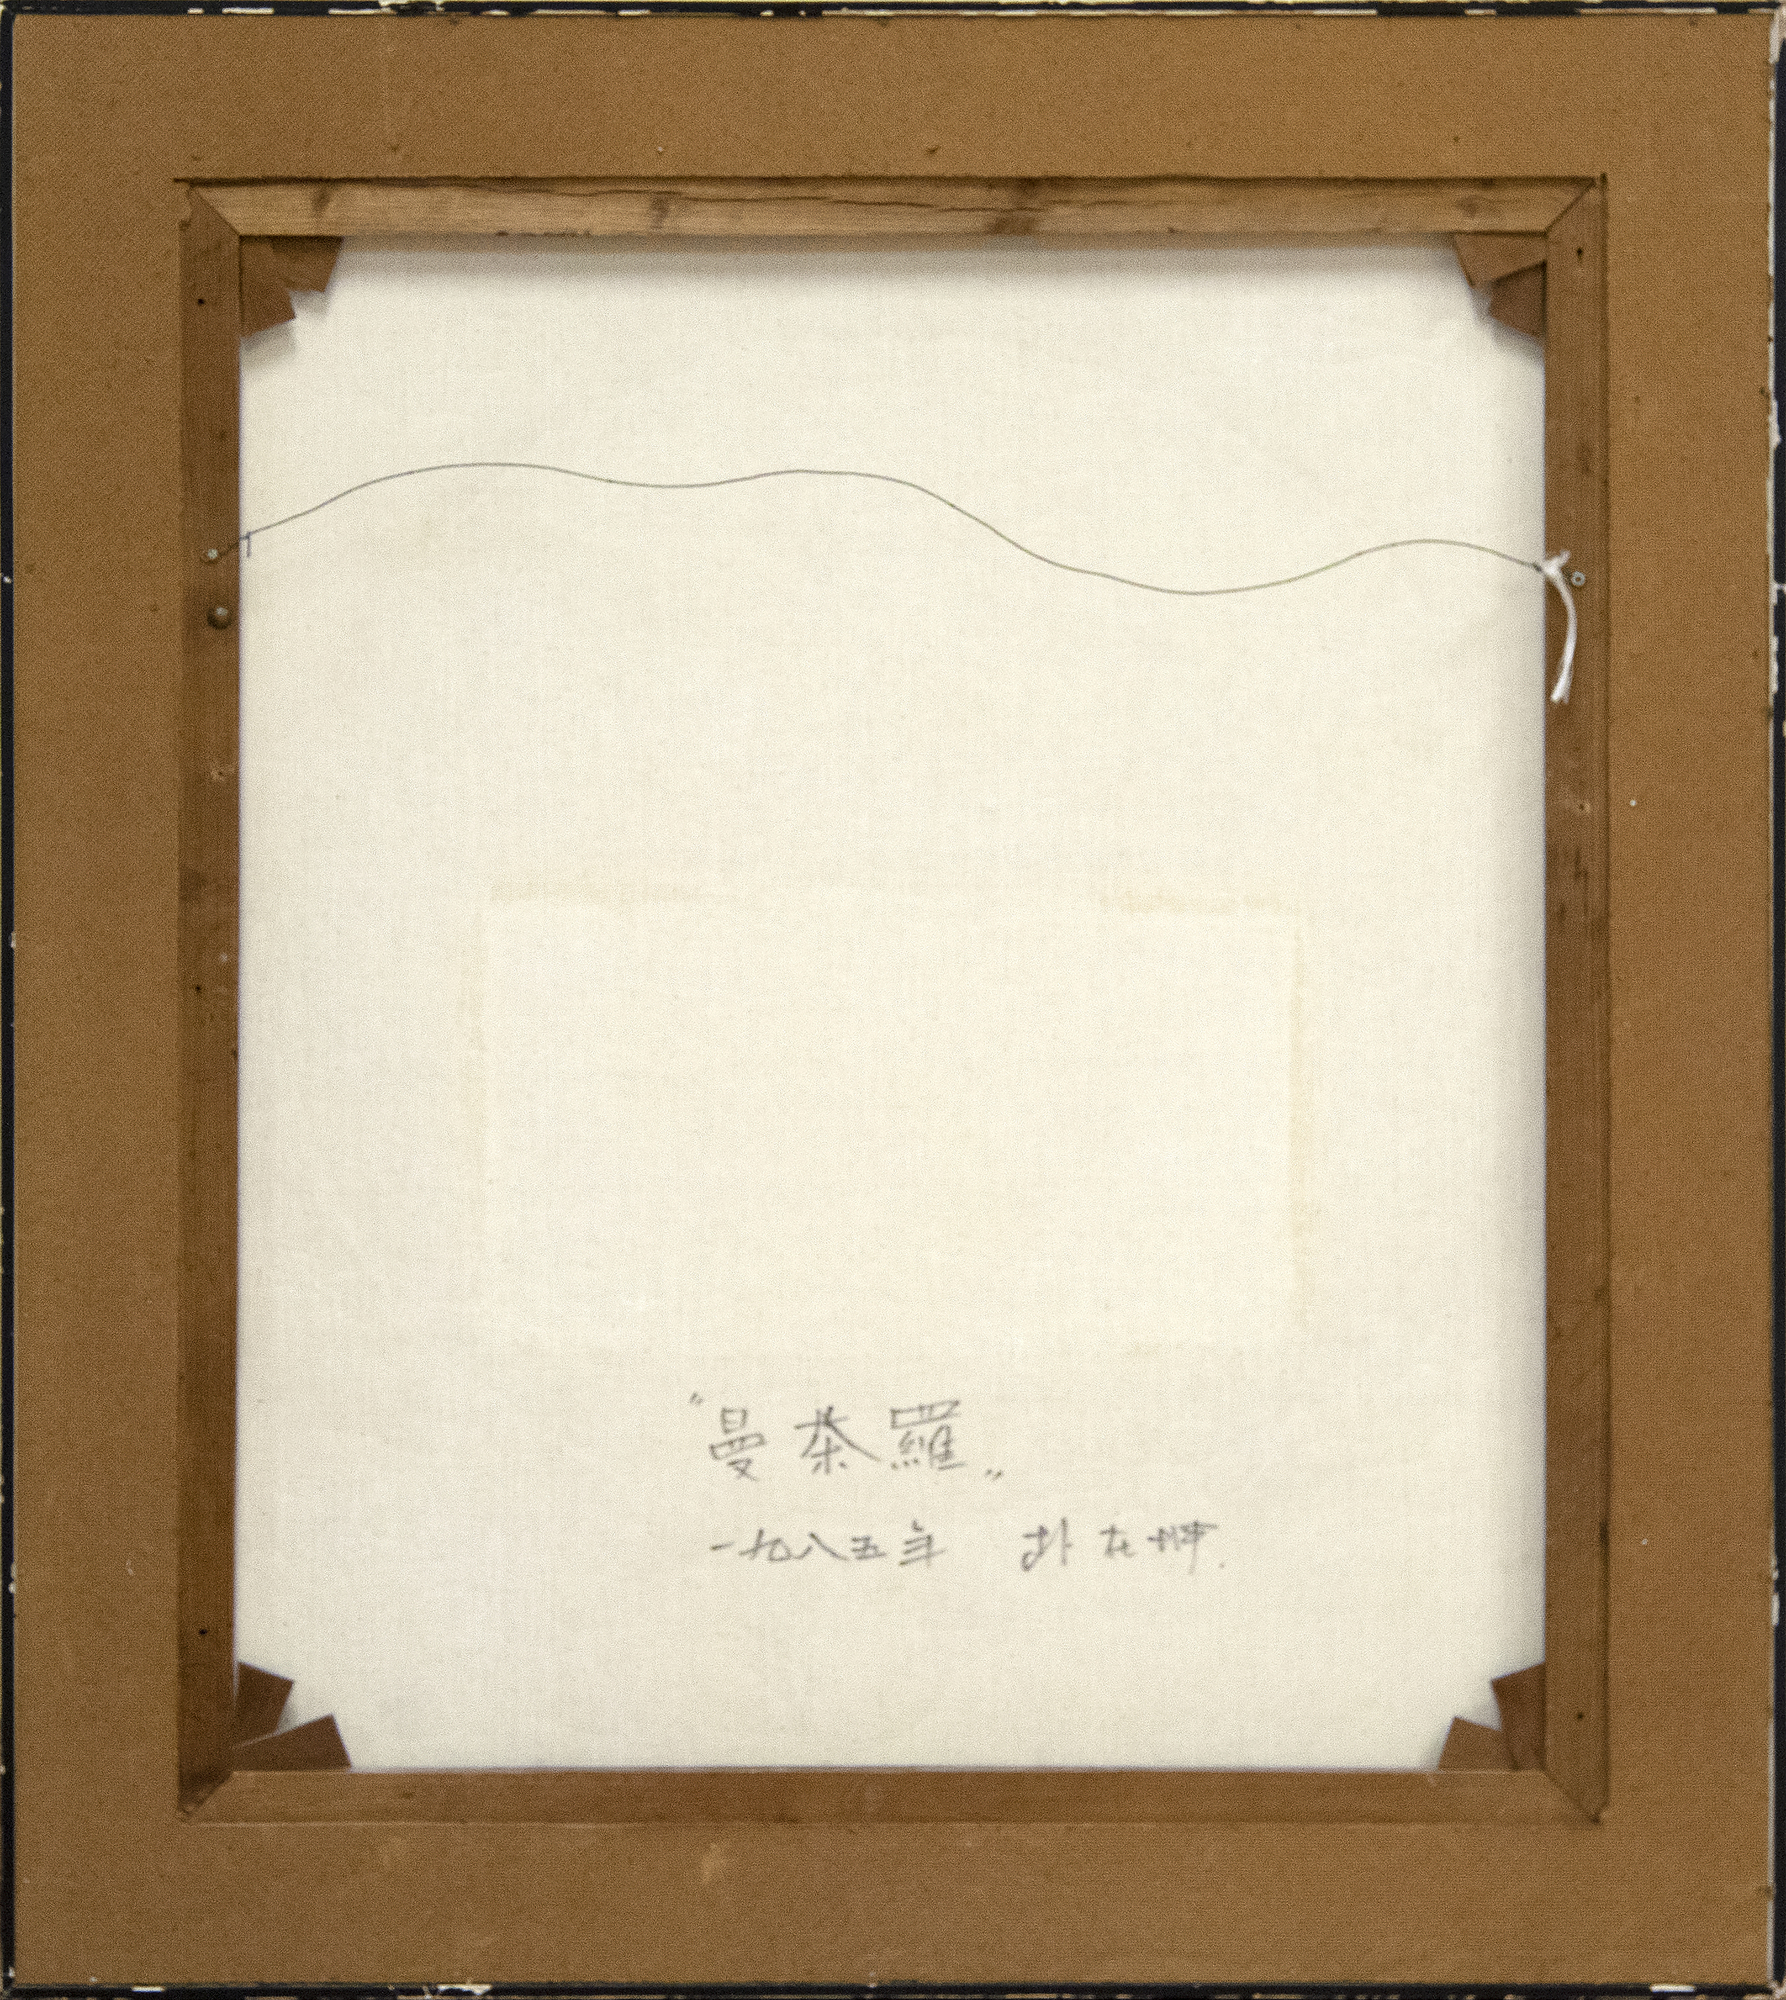 JAE KON PARK - بدون عنوان - النفط على قماش - 31 3/4 × 27 1/2 في.